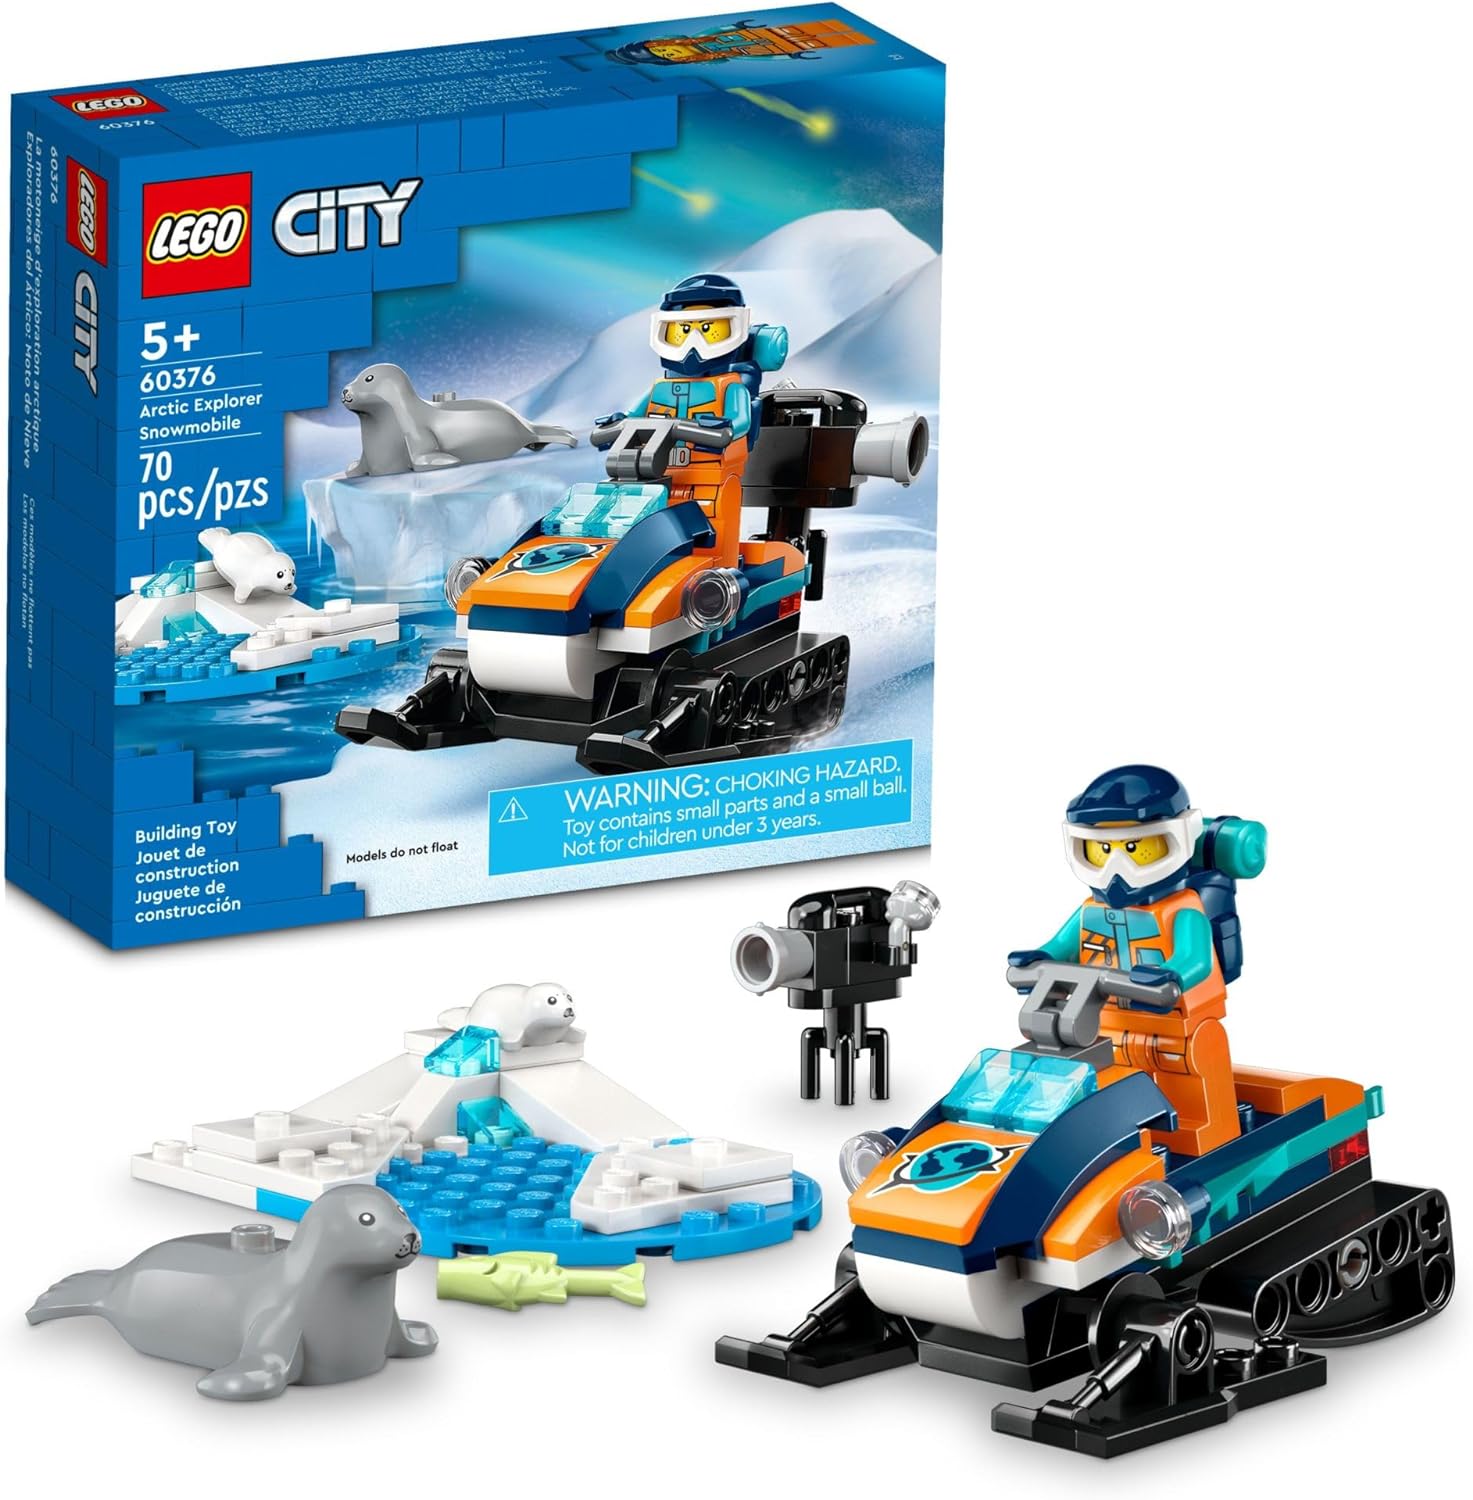 70-Piece LEGO City Arctic Explorer Snowmobile $5.50 + Free Shipping w/ Prime or $35+